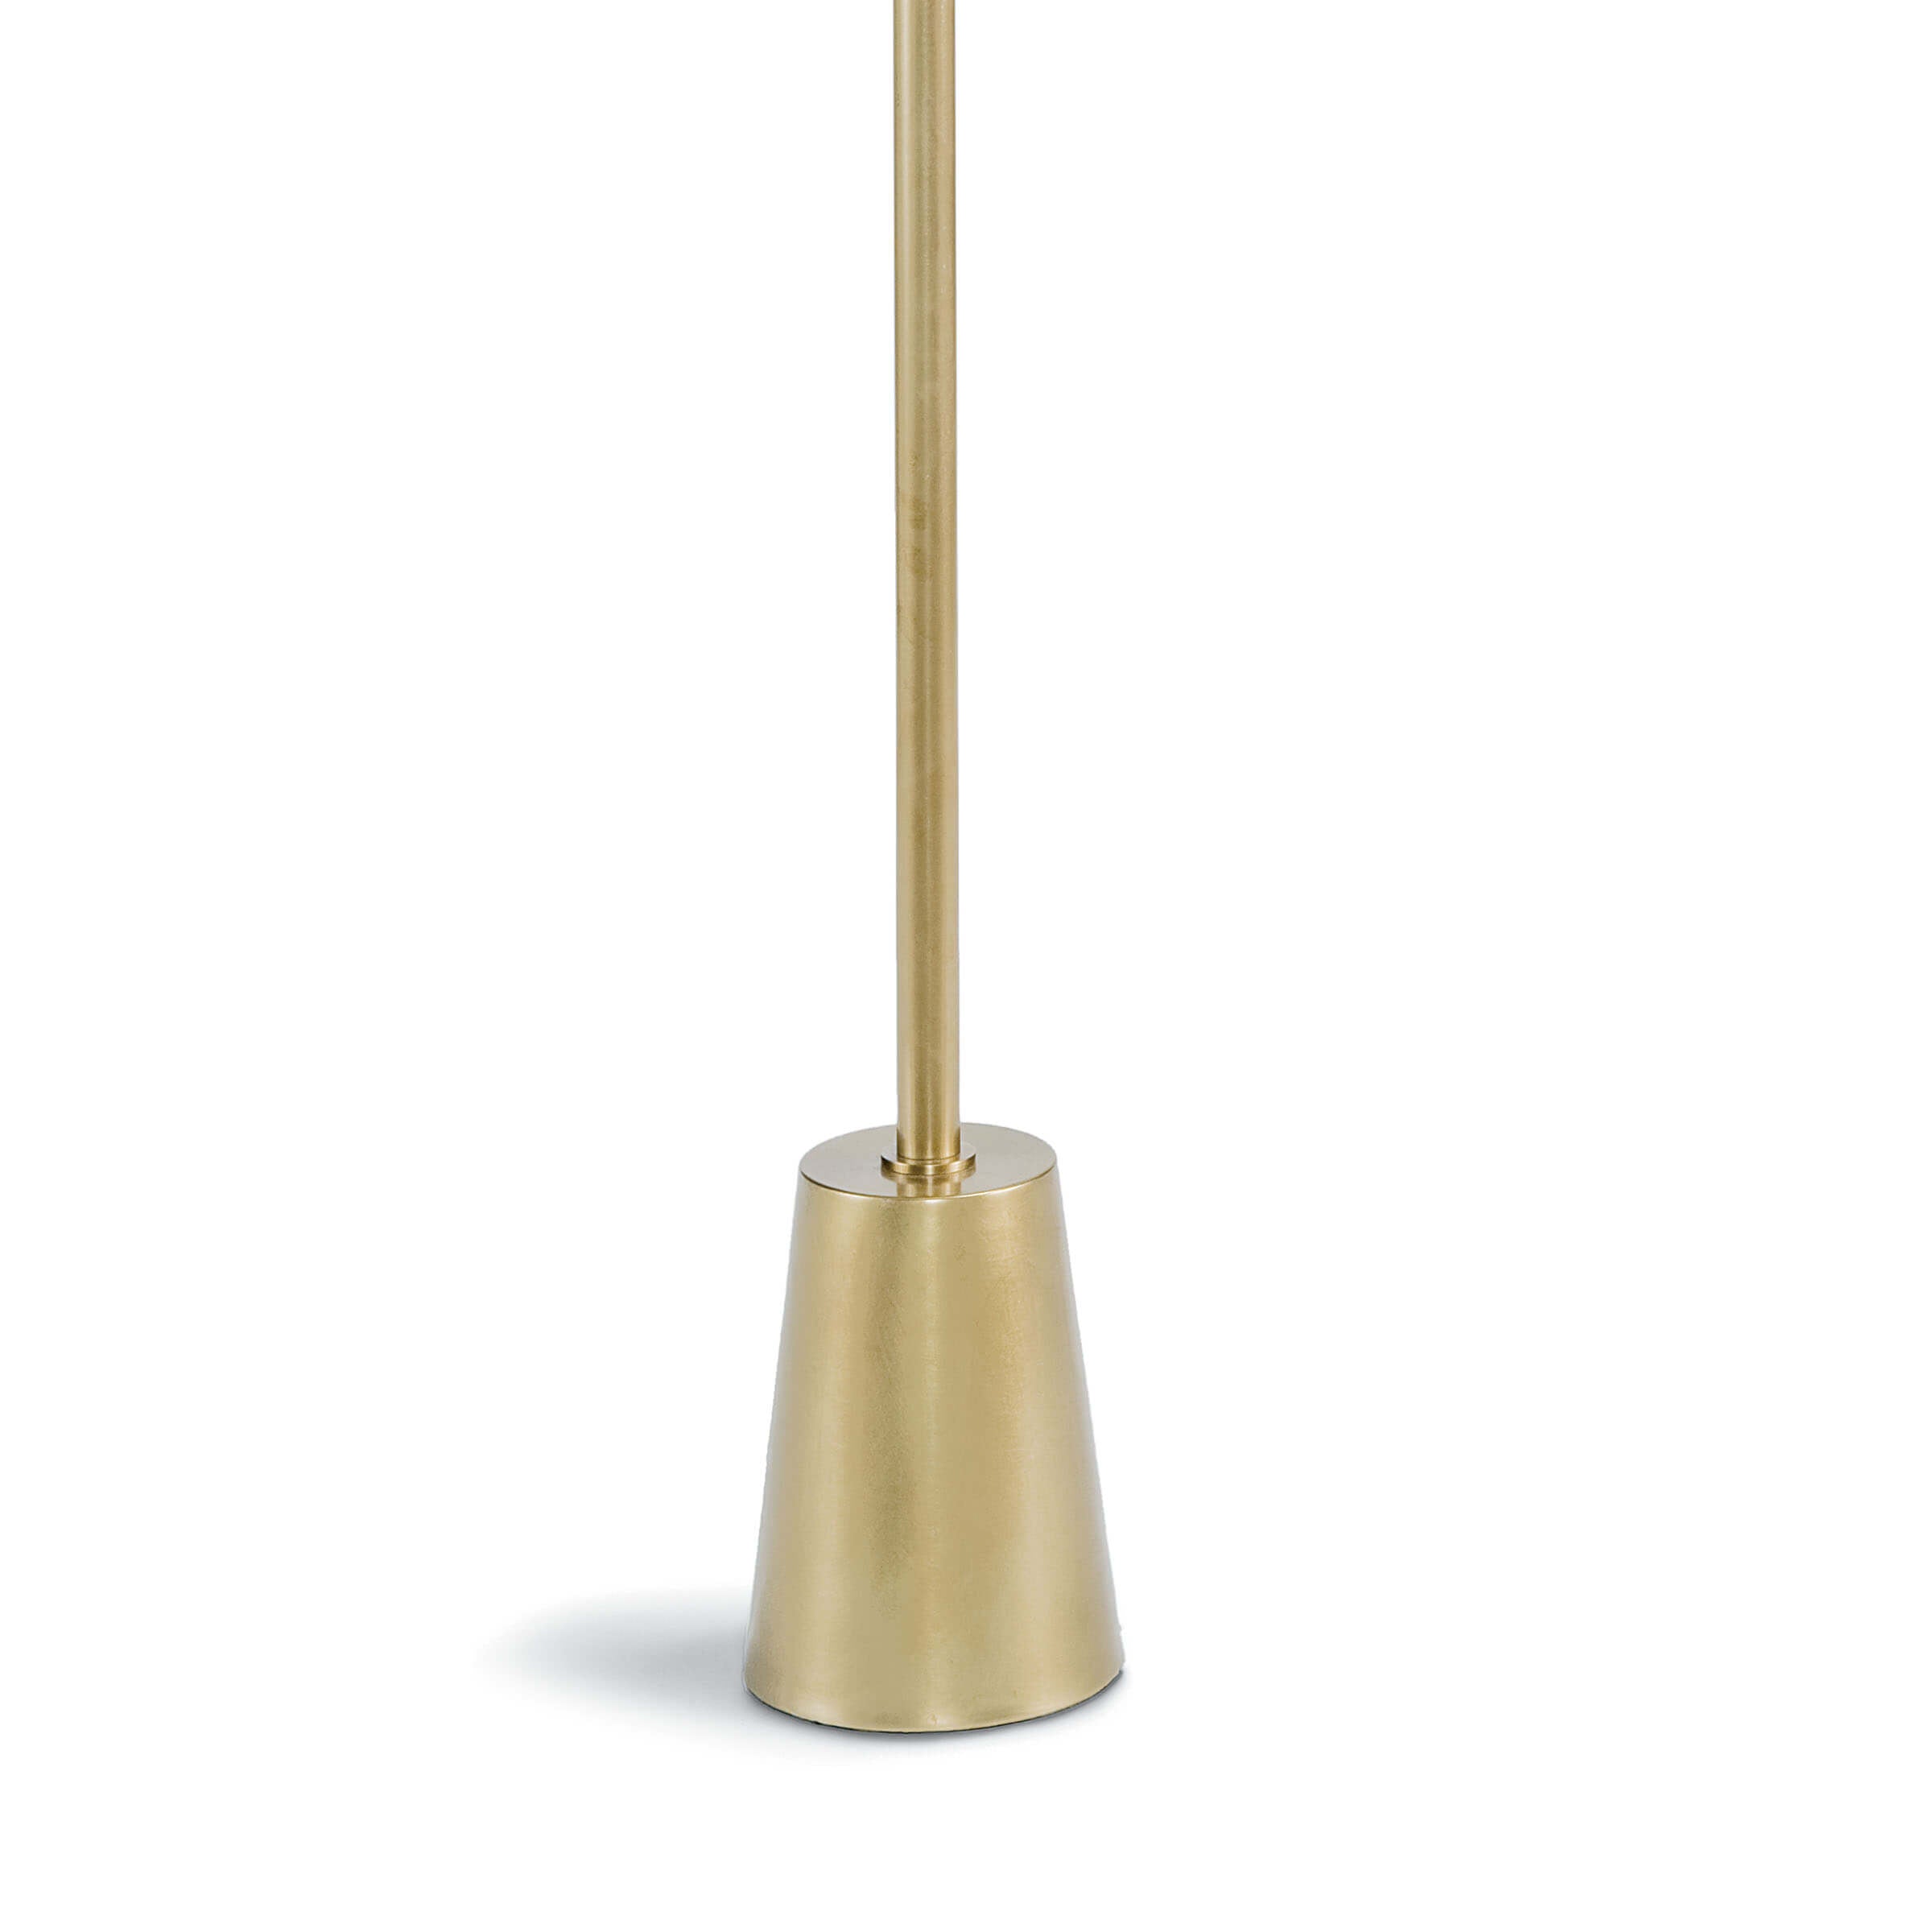 Regina Andrew  Raven Floor Lamp (Natural Brass) Lamp Regina Andrew   